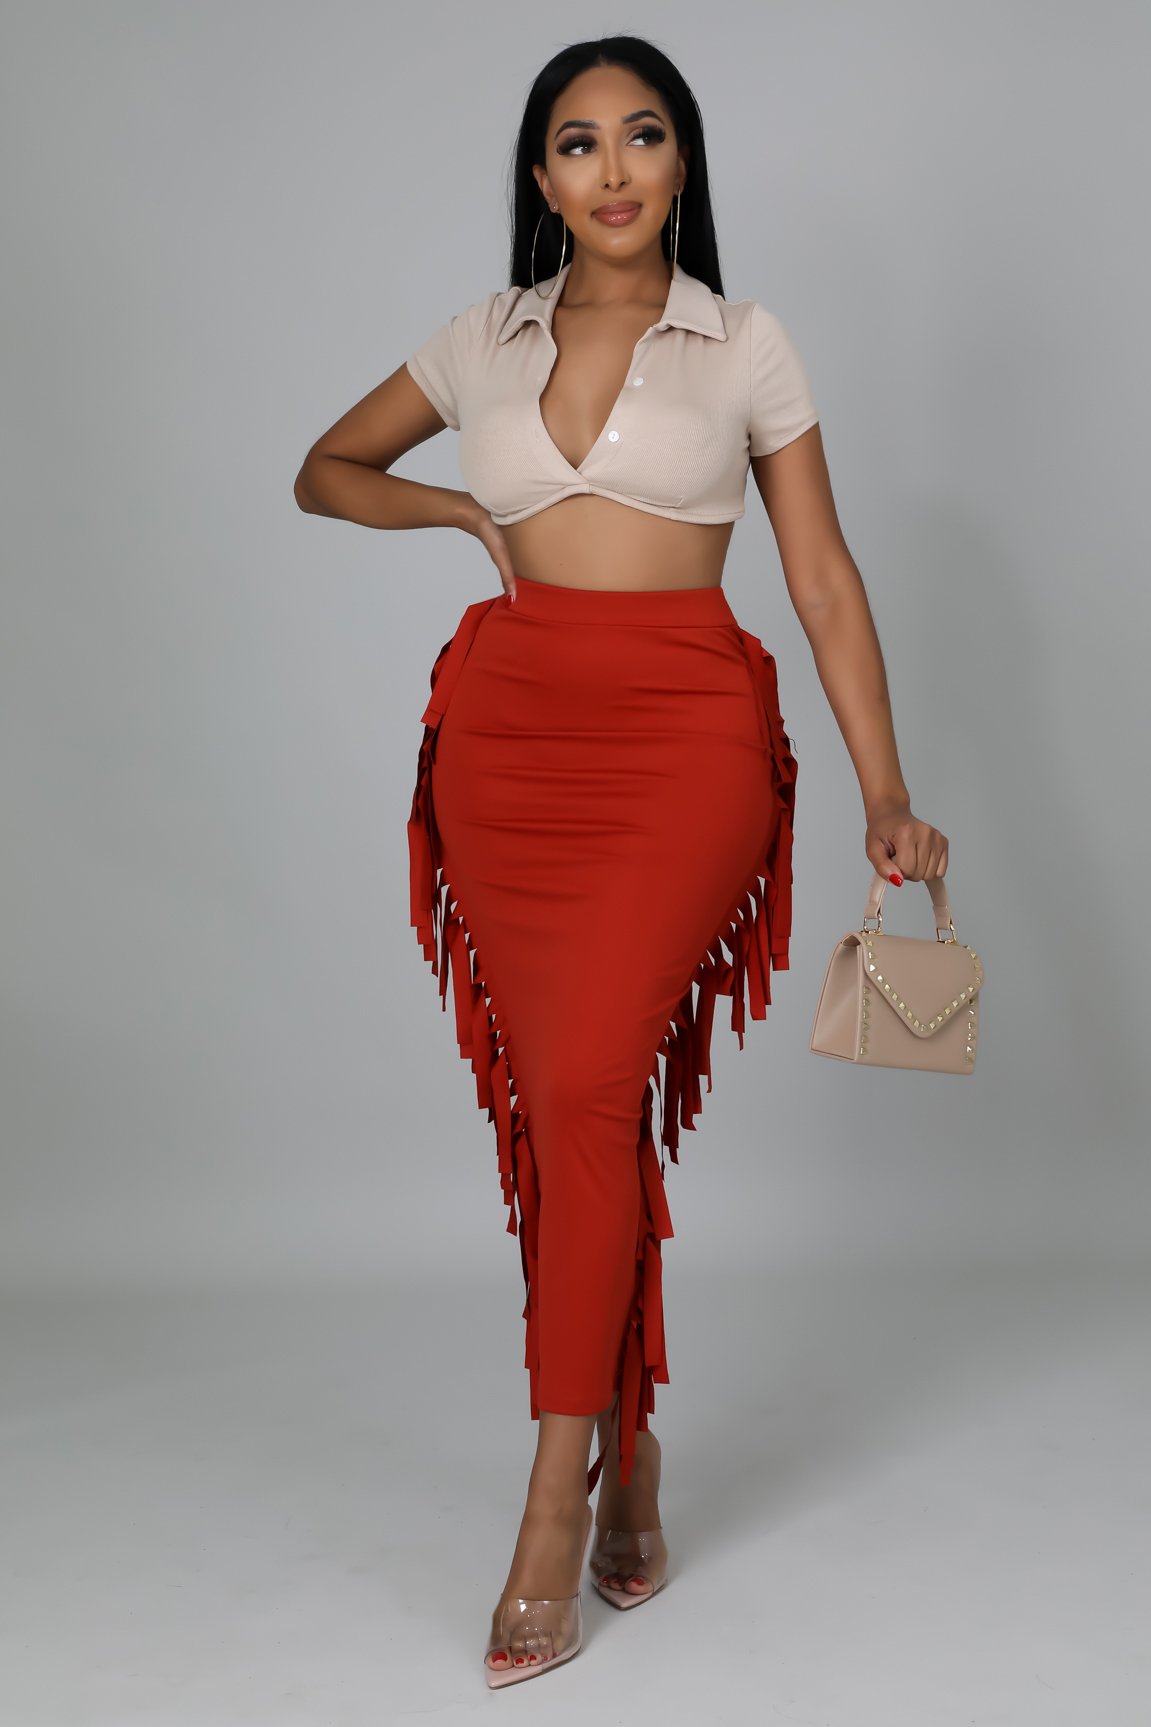 Kamalei Skirt